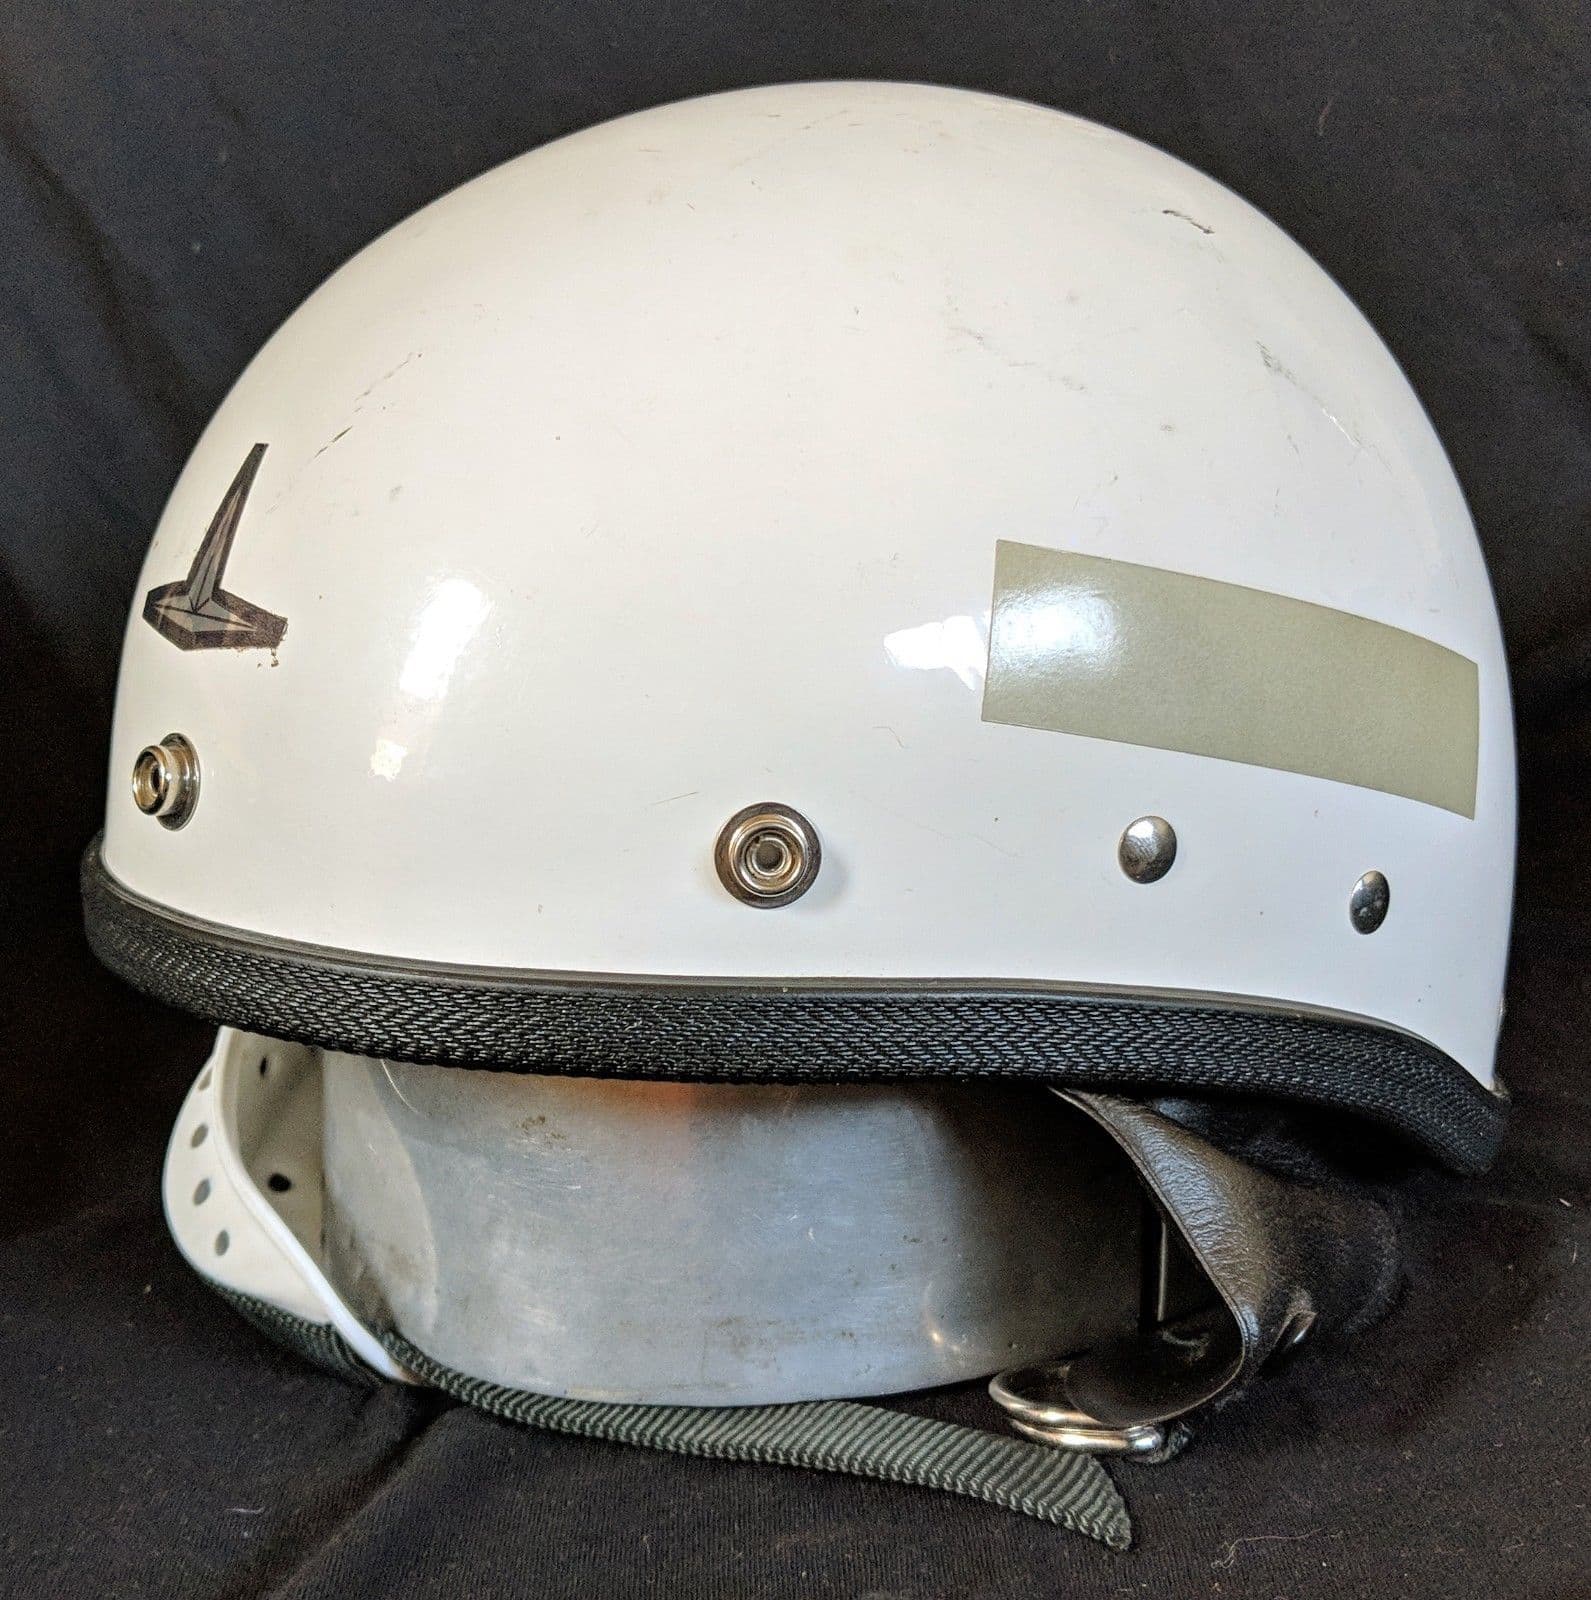 7534 Sears Buco Helmet